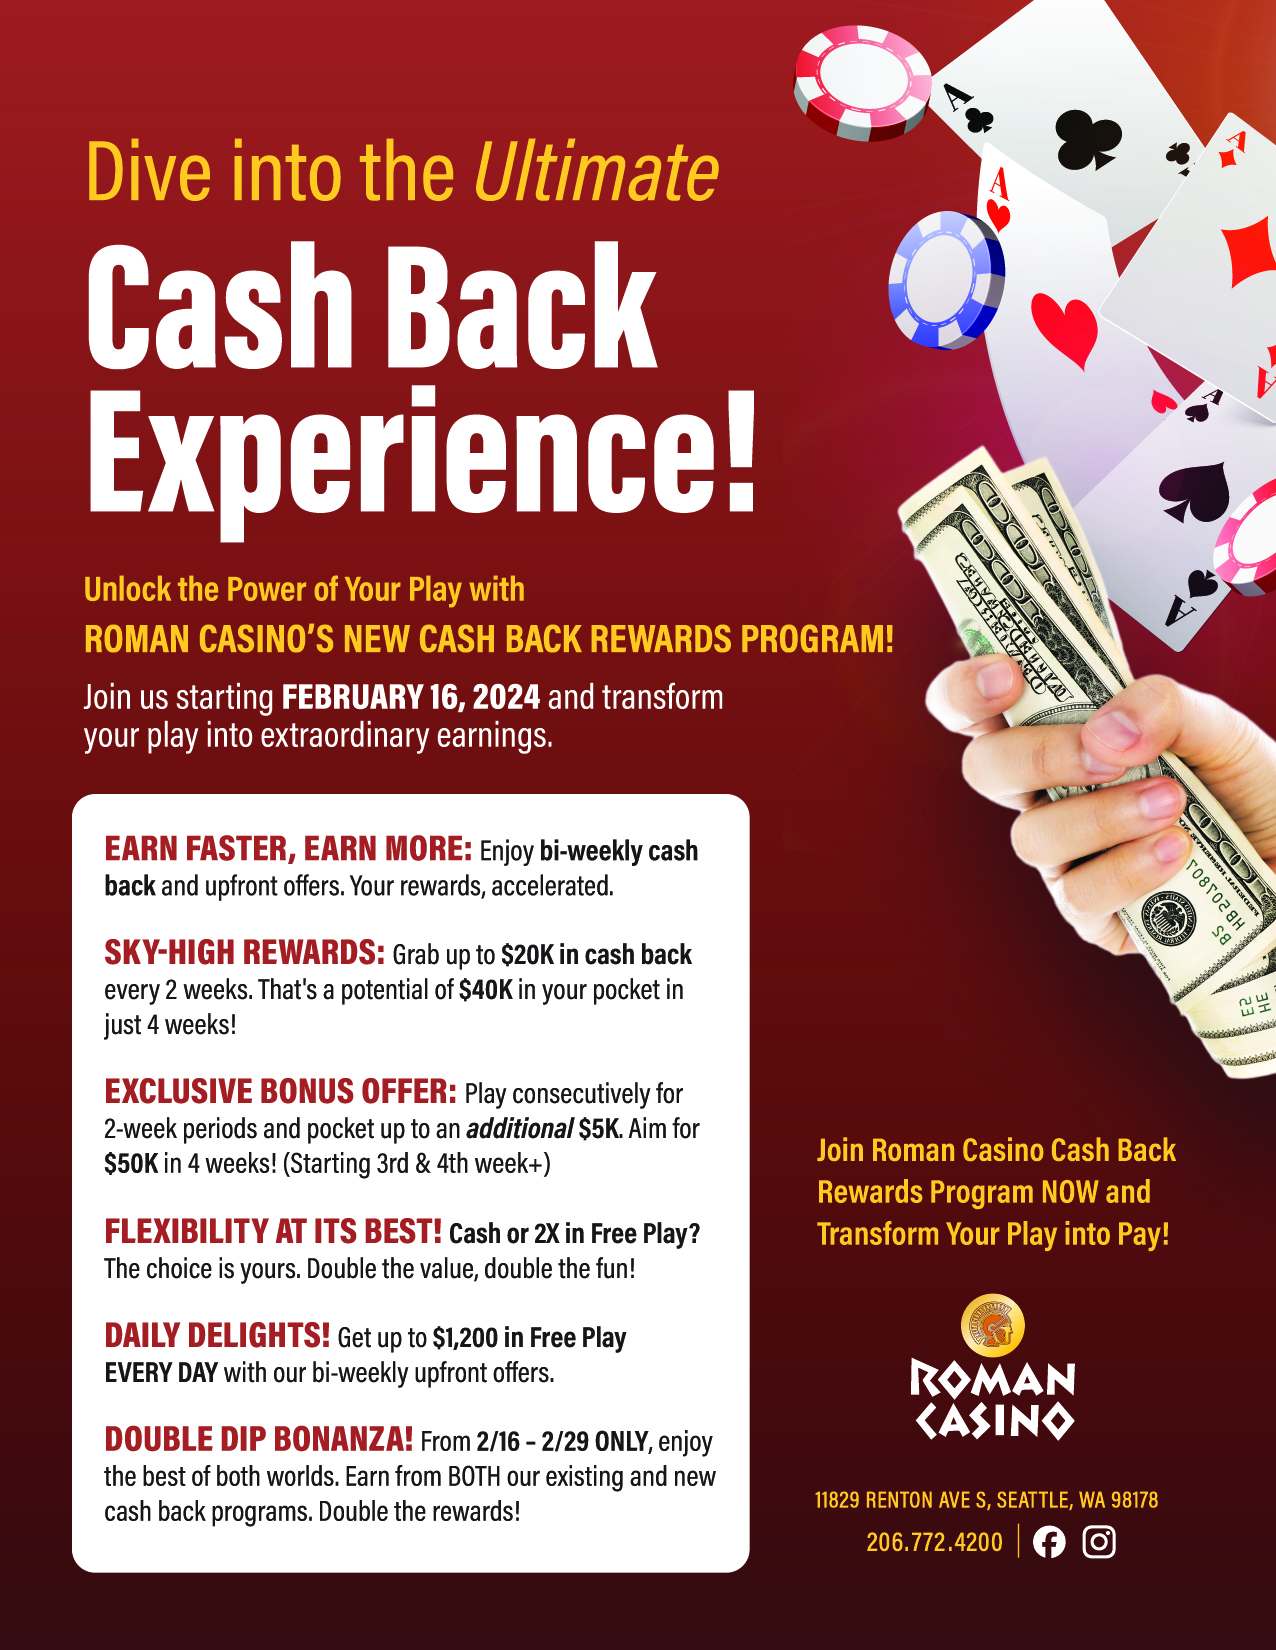 Roman Casino Renton, Washington | New Cash Back Program